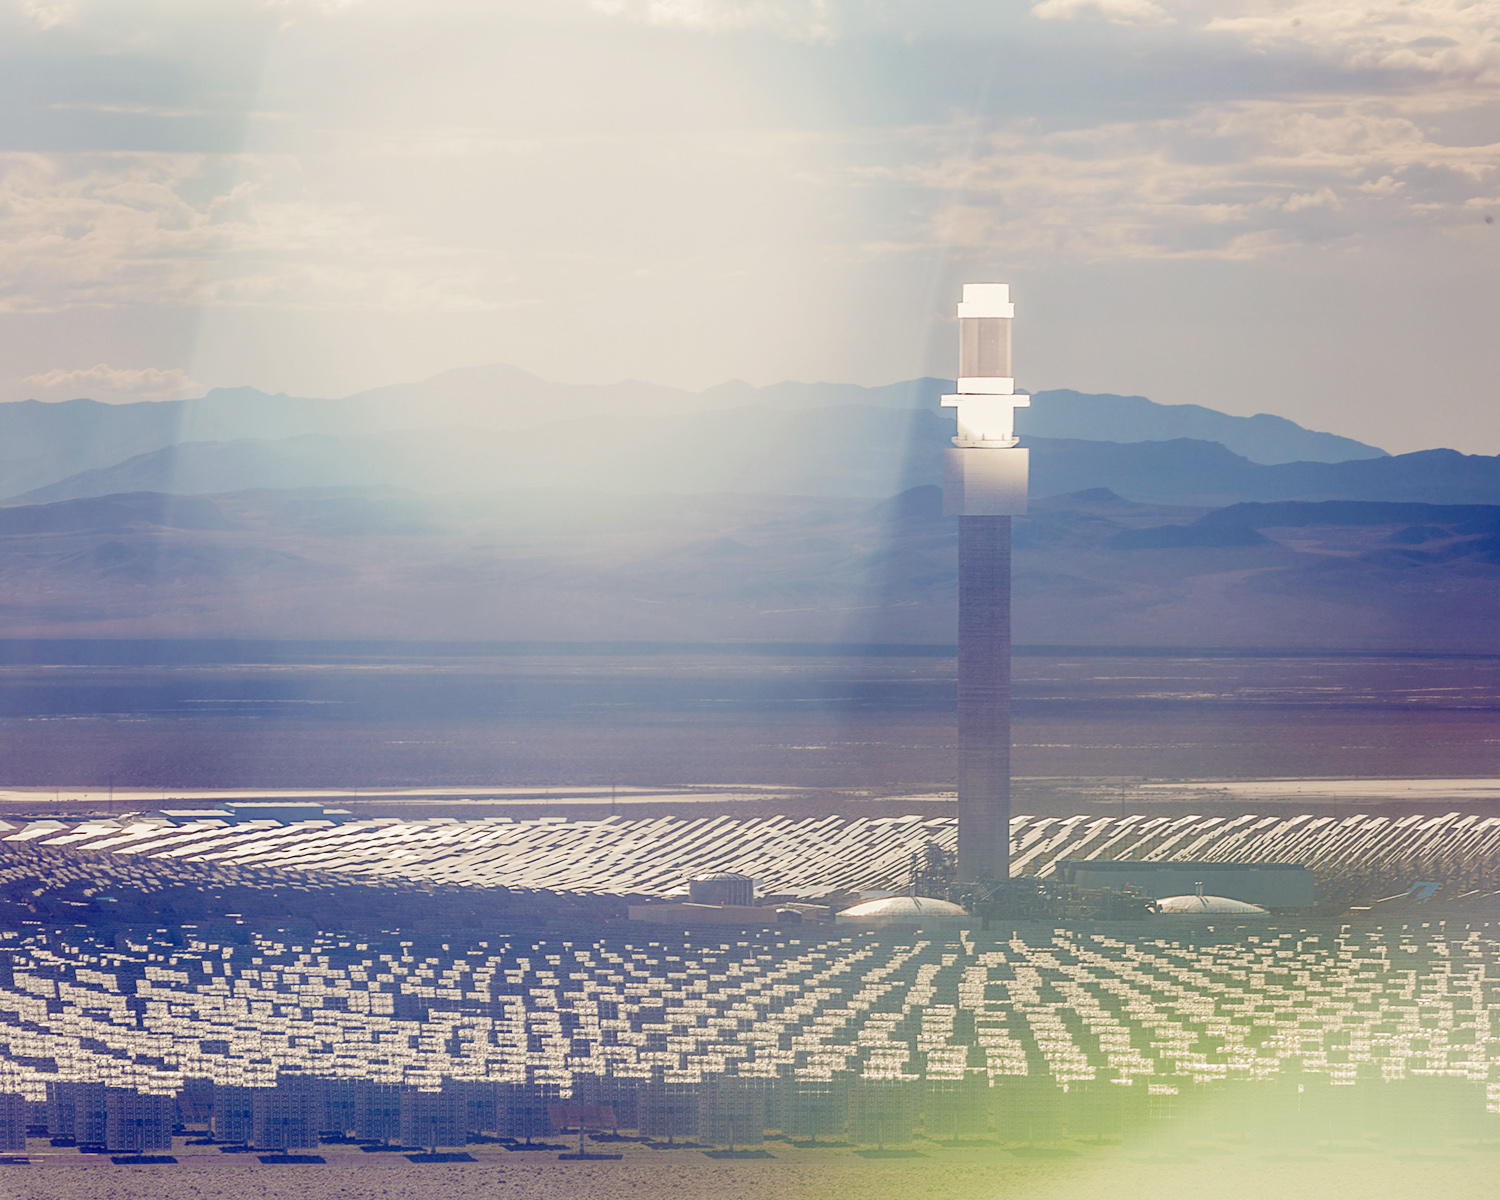 Solar thermal power plant, Nevada desert, U.S.A.